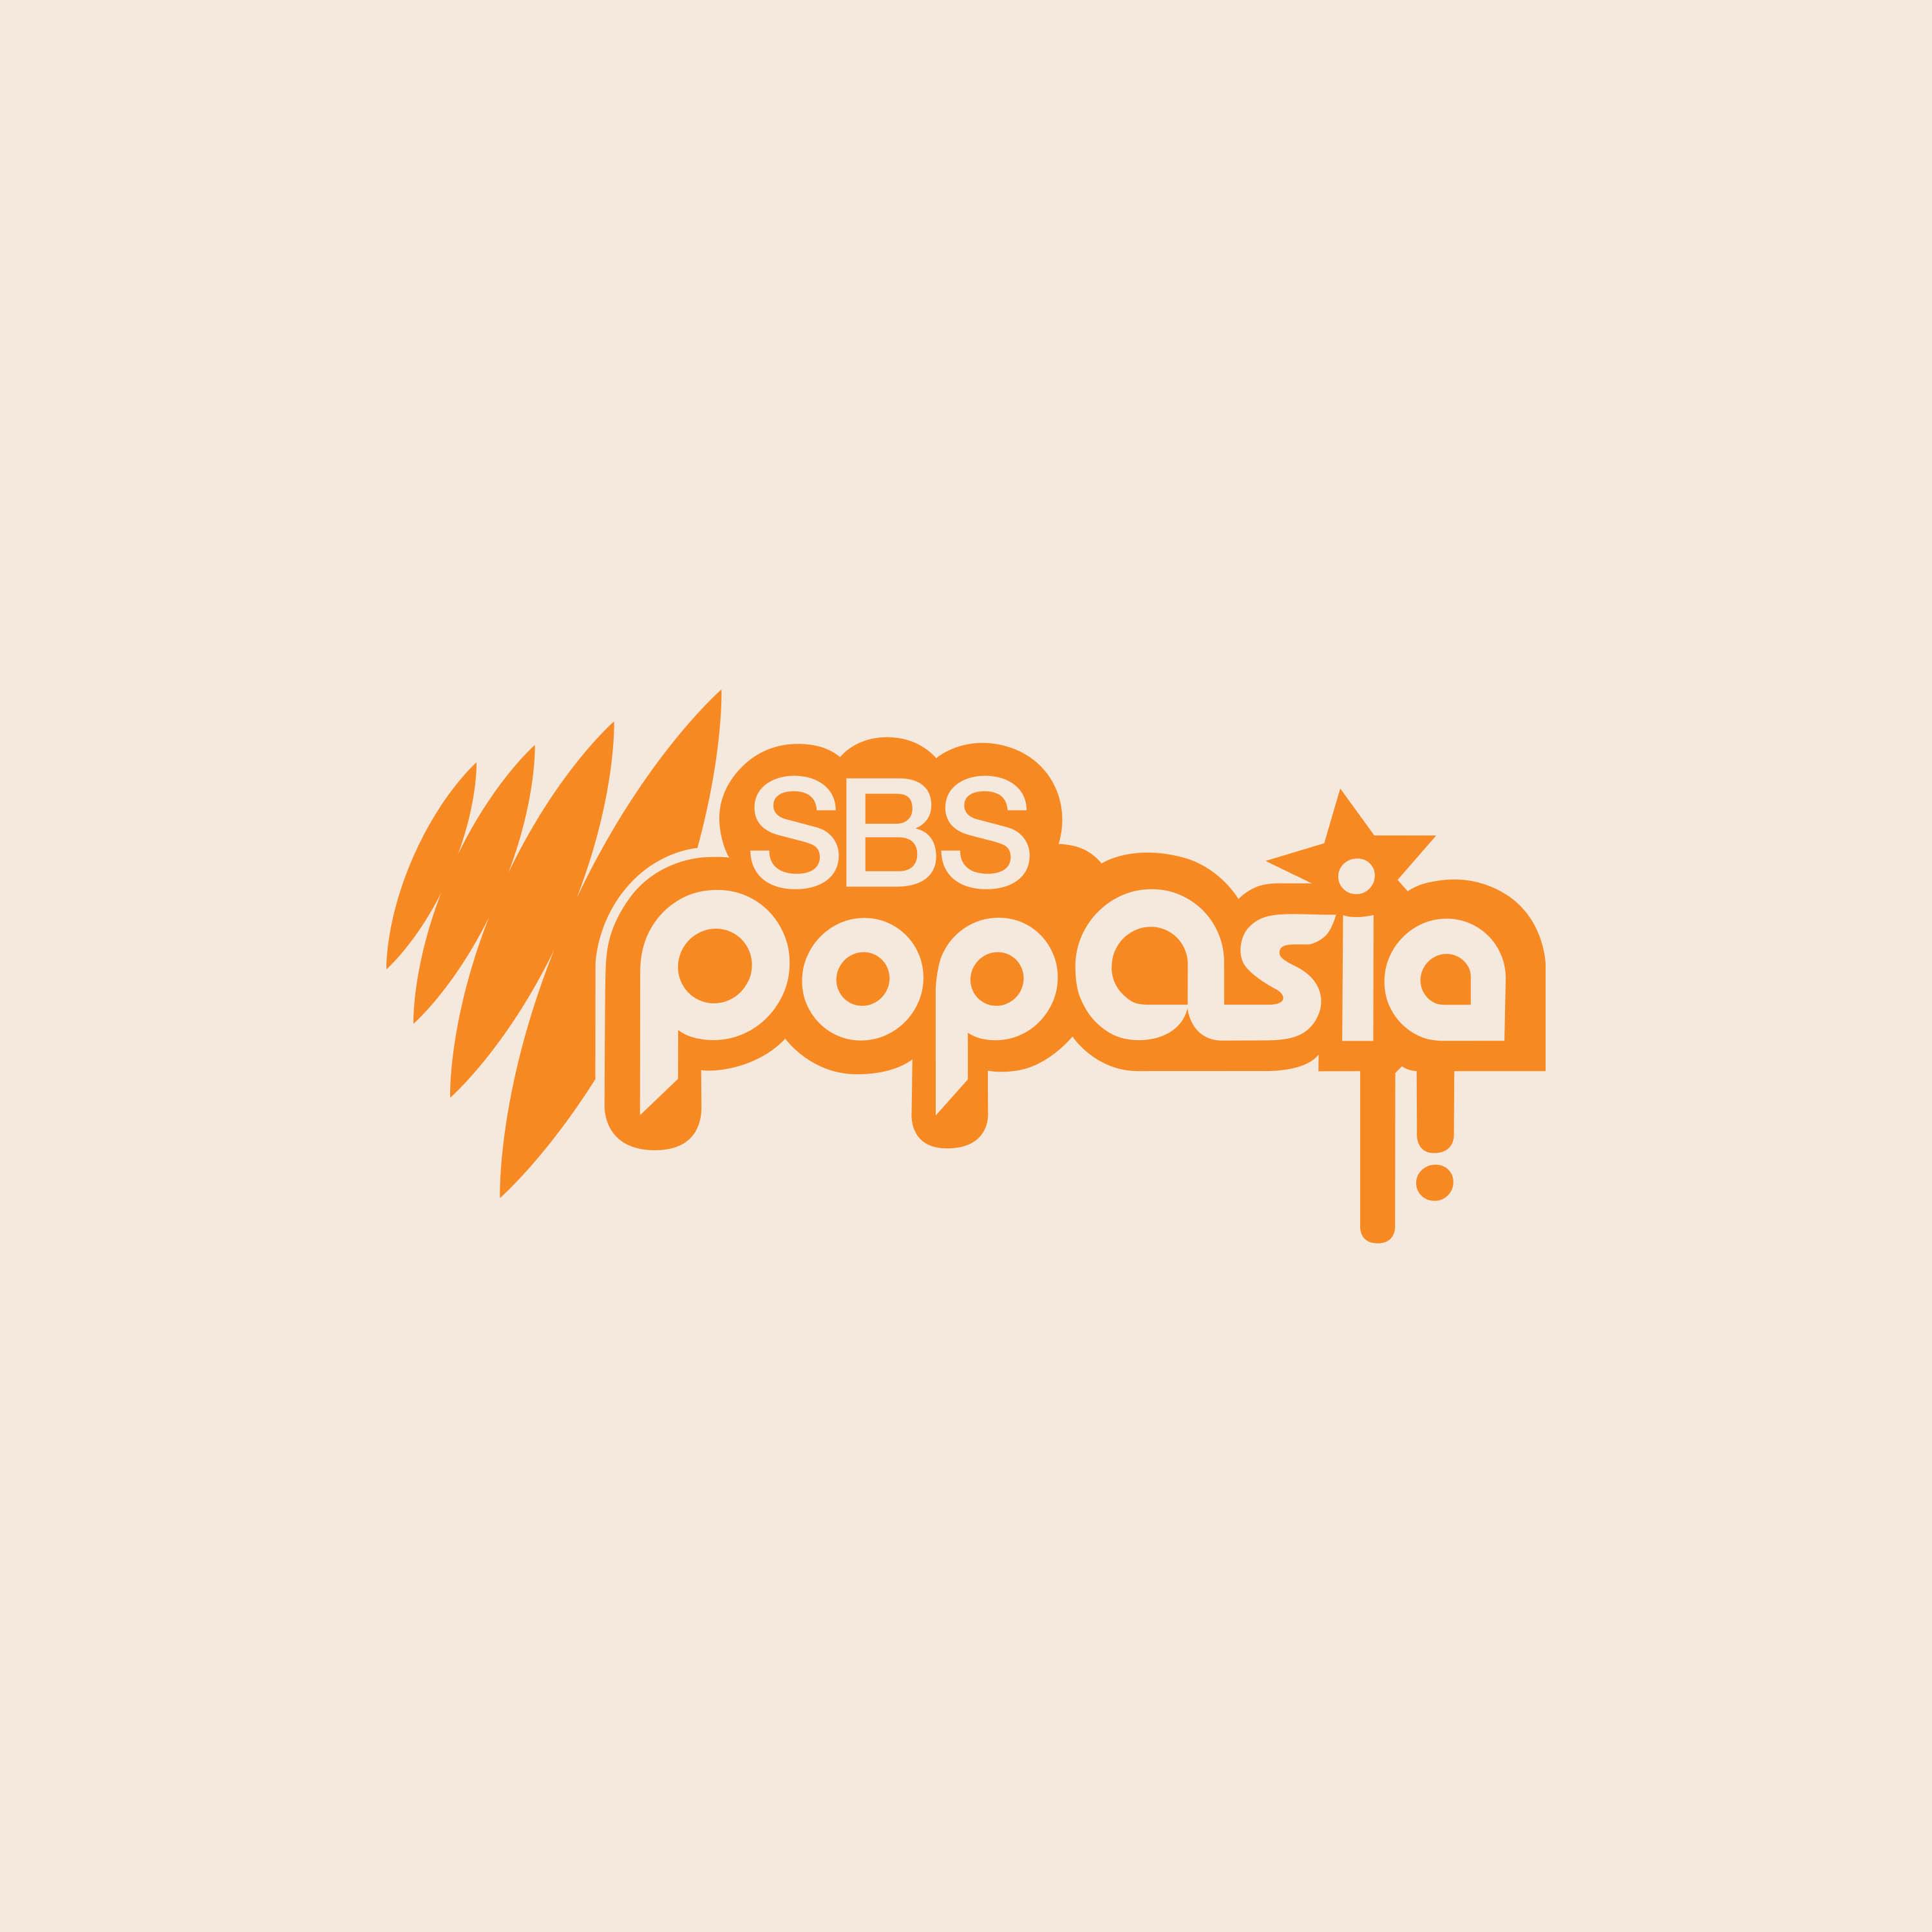 SBS PopAsia logo